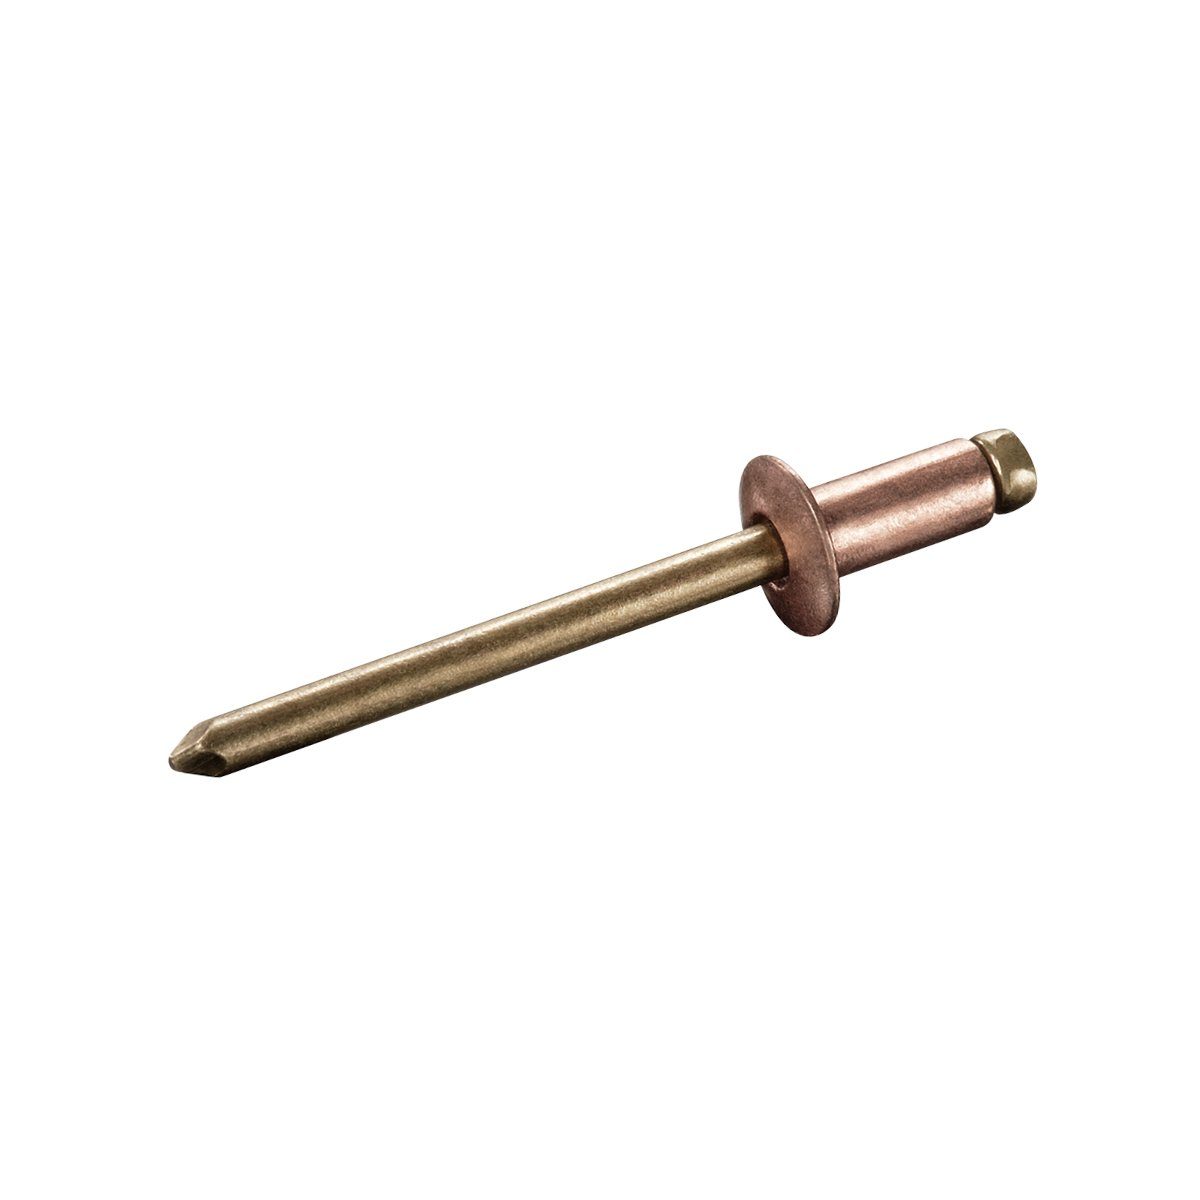 Bronze STANDARD ISO16582 - - (1000x 3,0 8,0 1000 - Kupfer Flachkopf mm, / GmbH St., GOEBEL x Niete Blindniete Flachkopf 7090130802, Popniete), Legierung